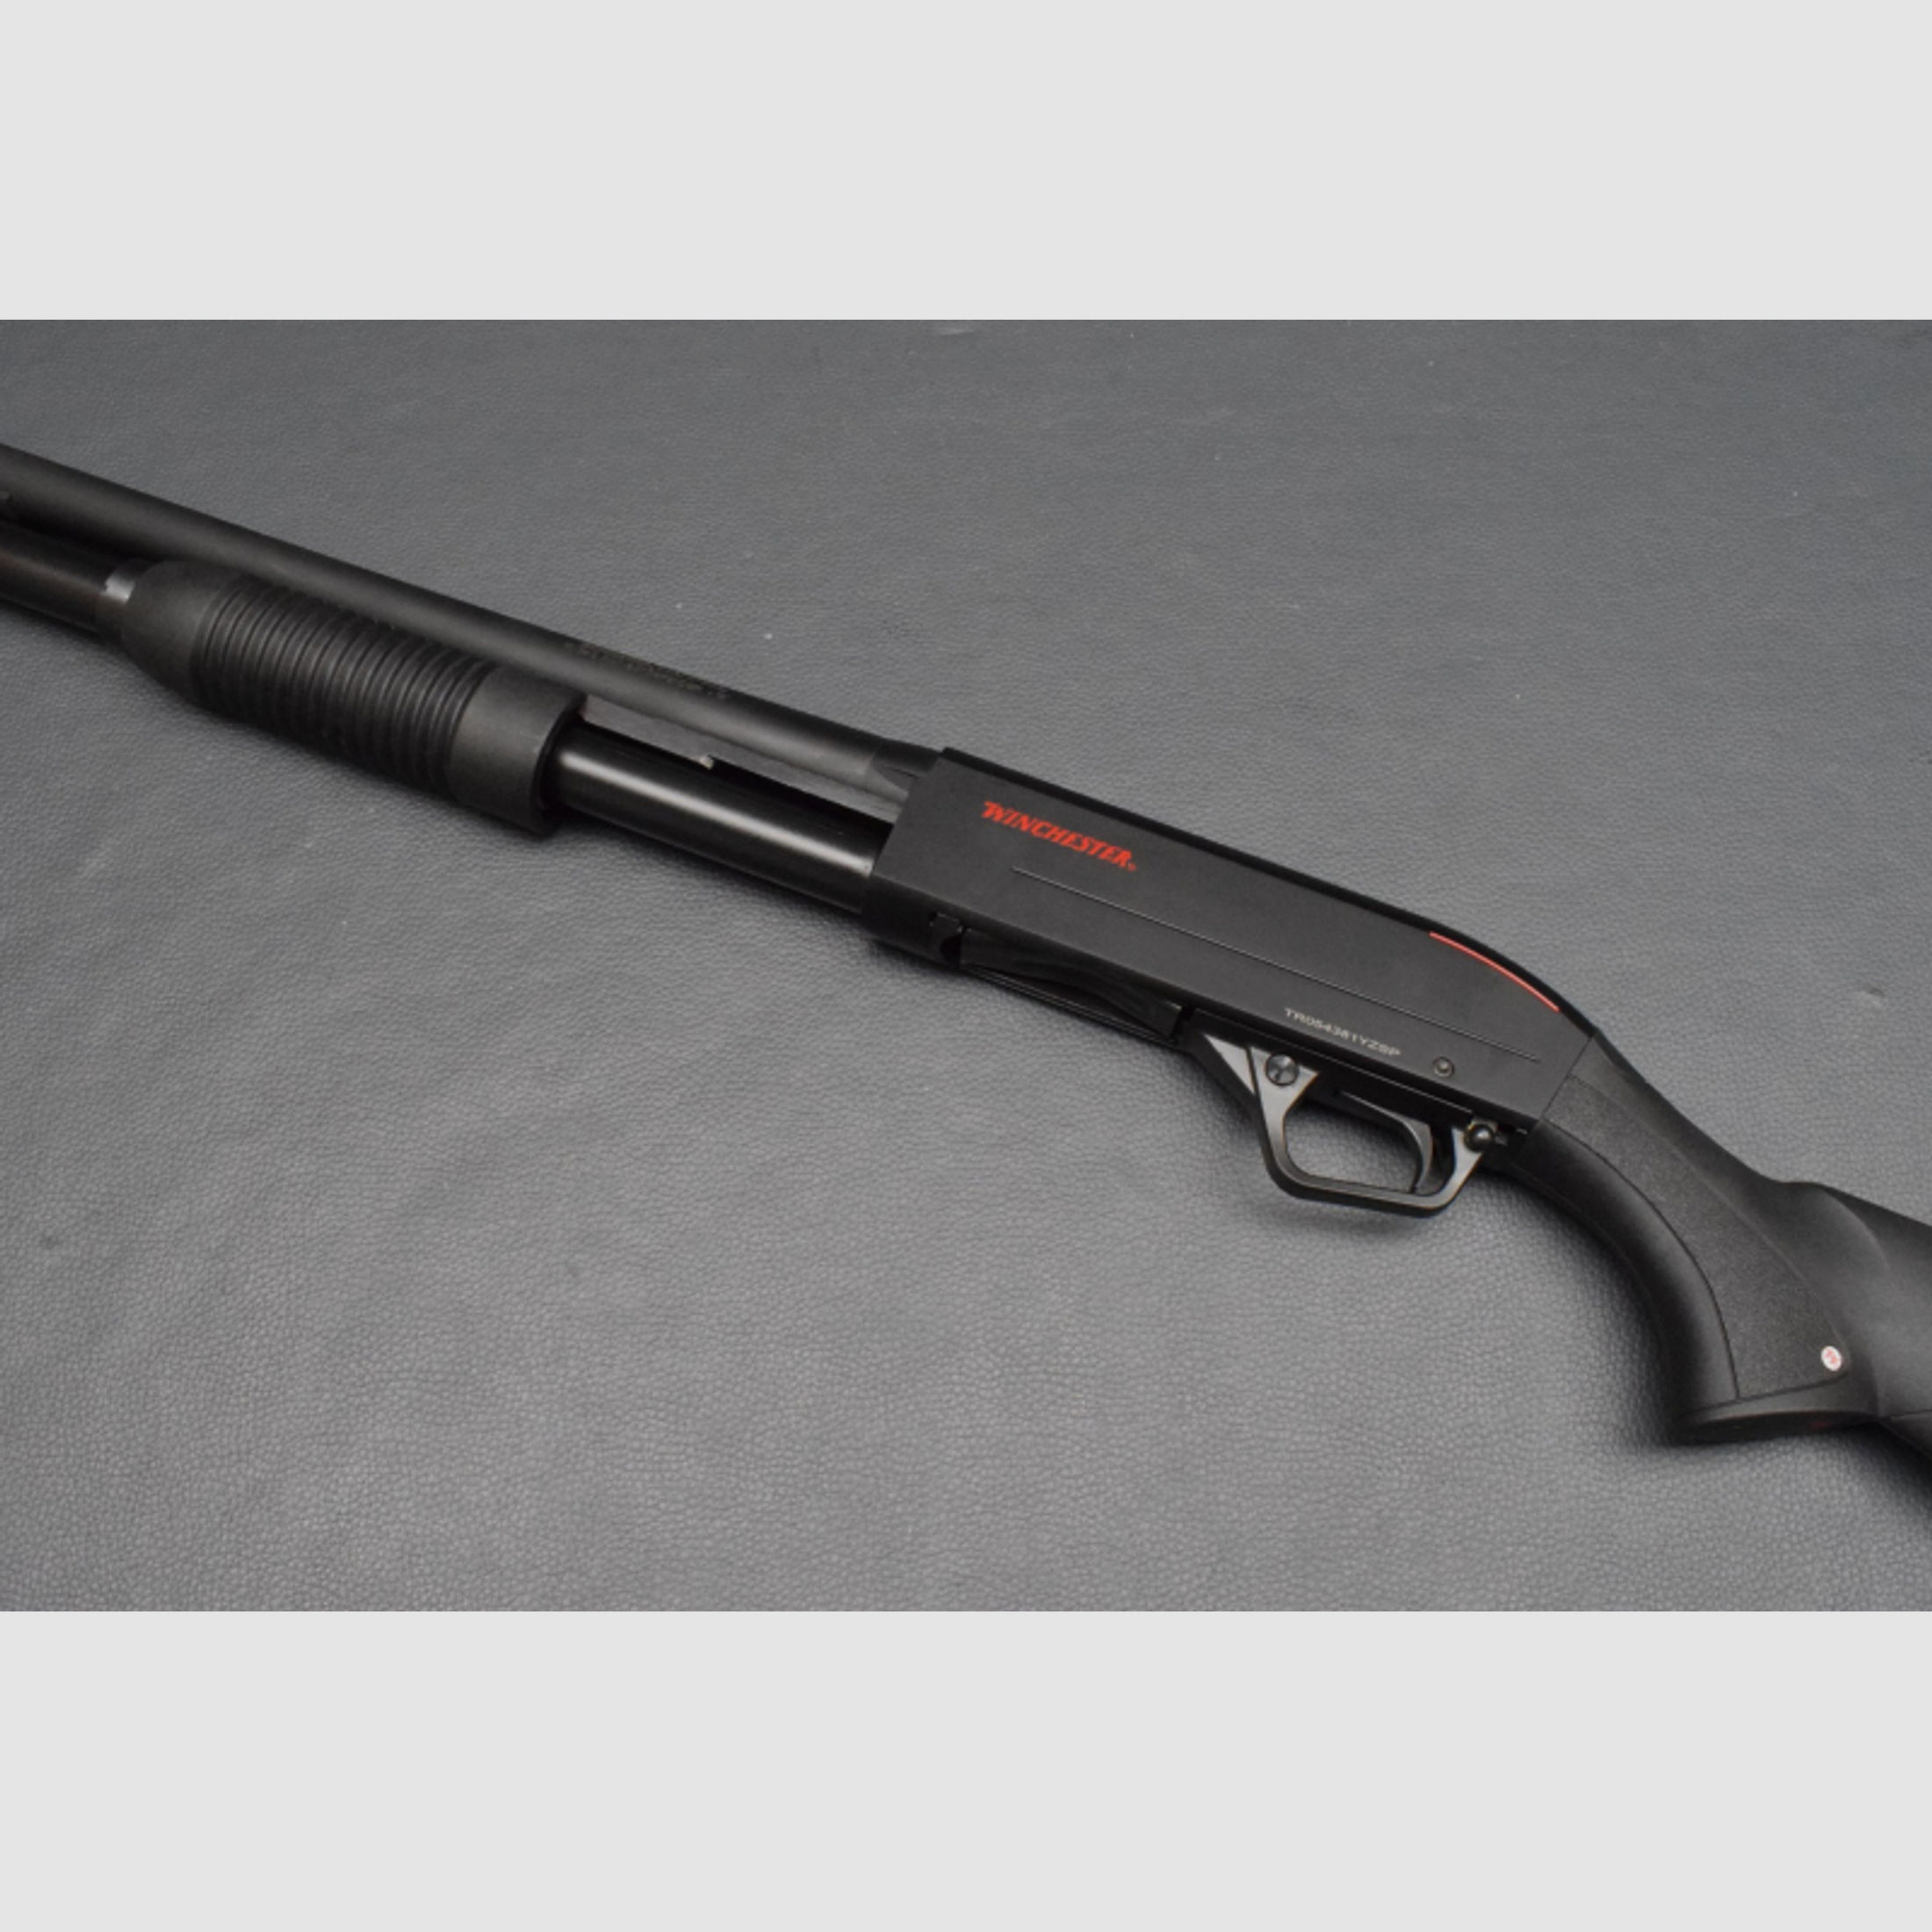 Winchester Repetierflinte, SXP Defender, Lauflänge 46cm/18", Kal. 12/76 Magnum, Neuware